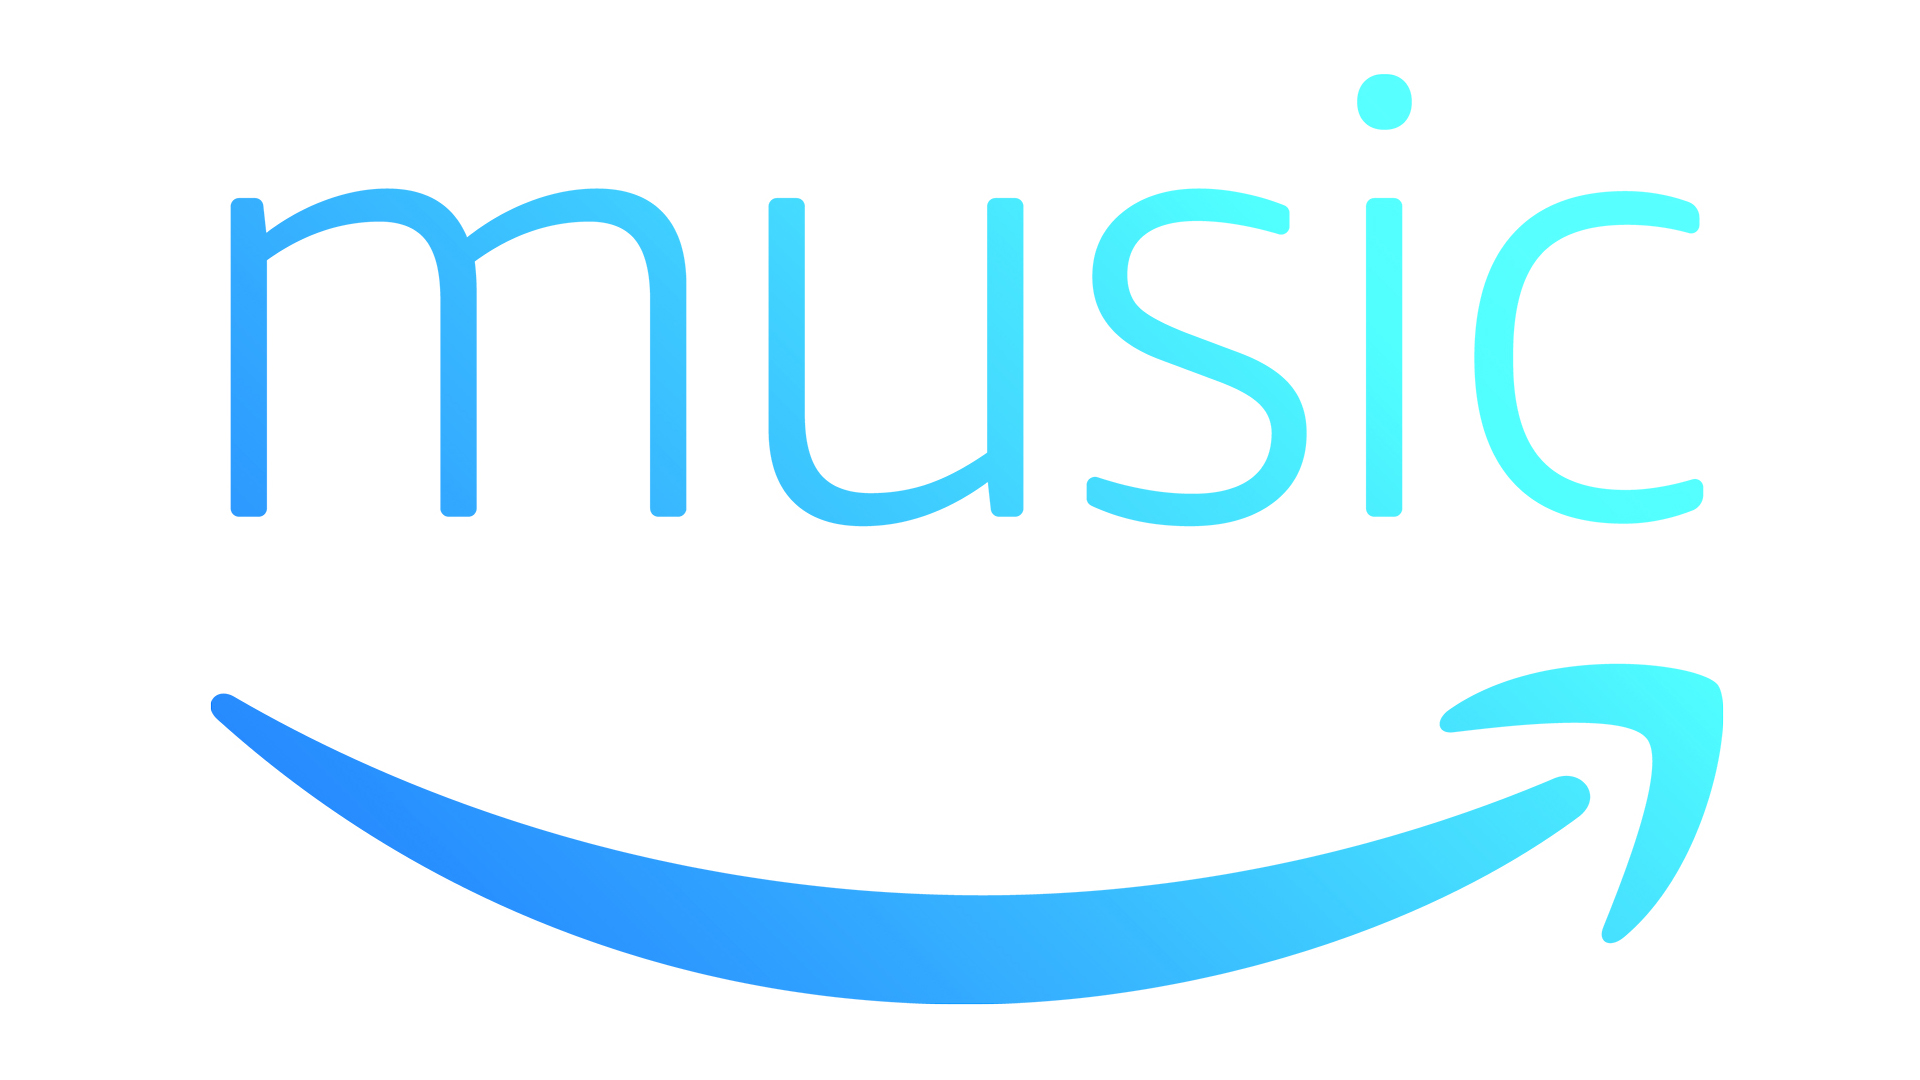 amazon music logo png